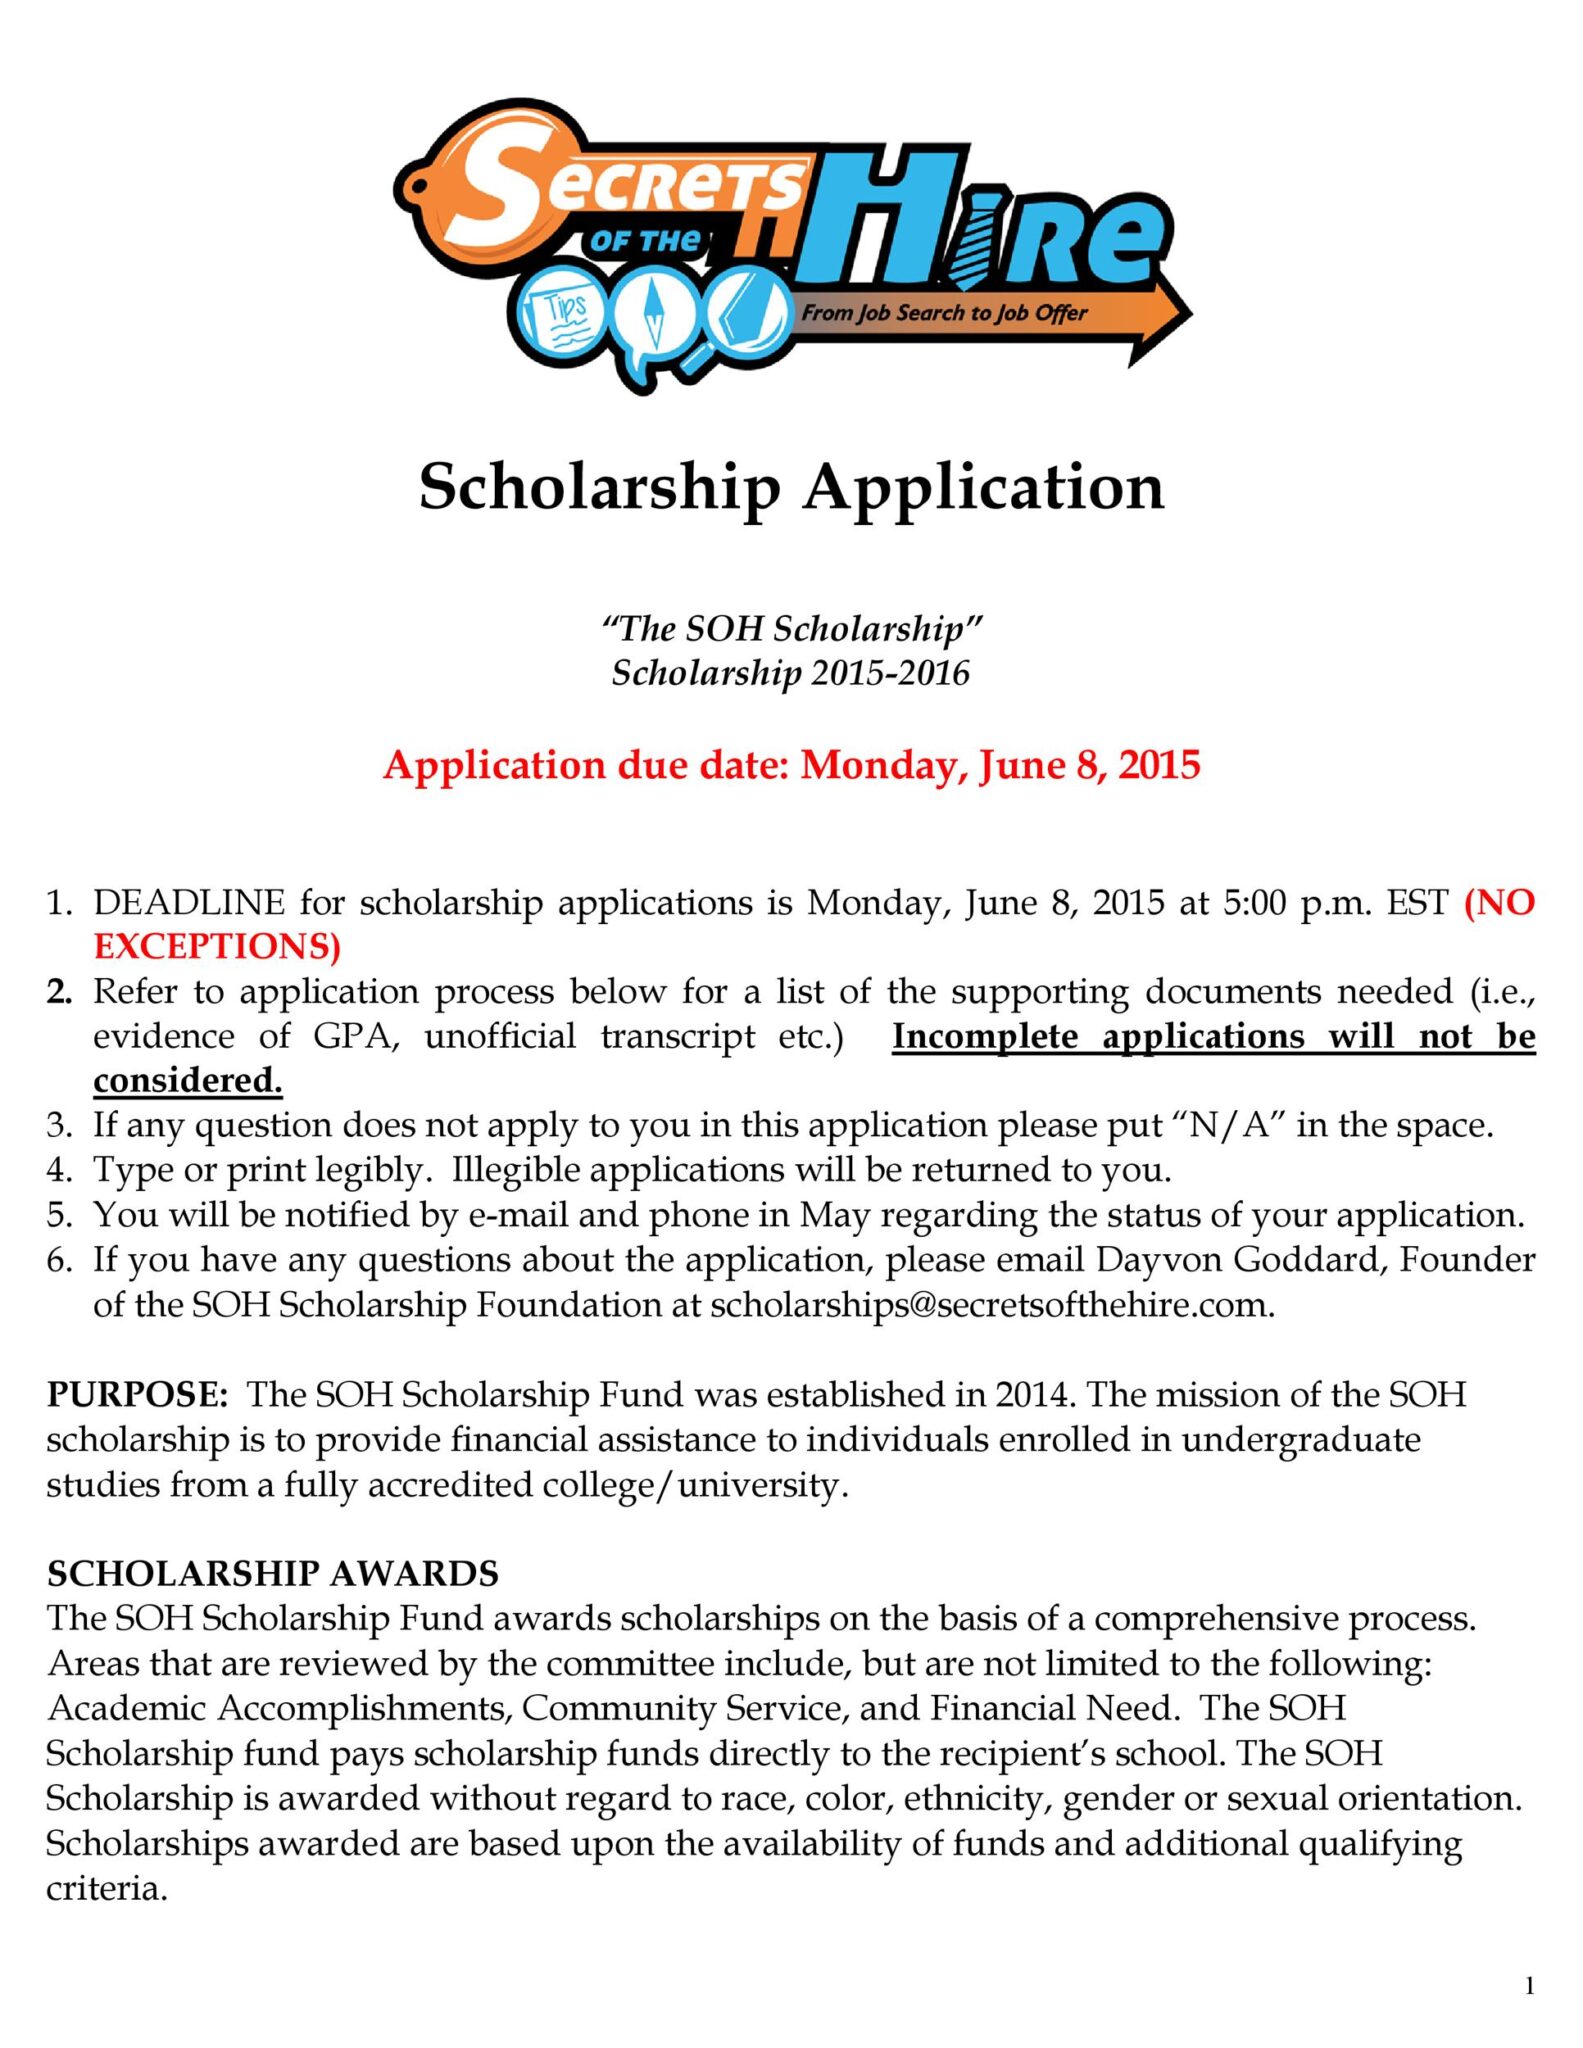 scholarship application video example